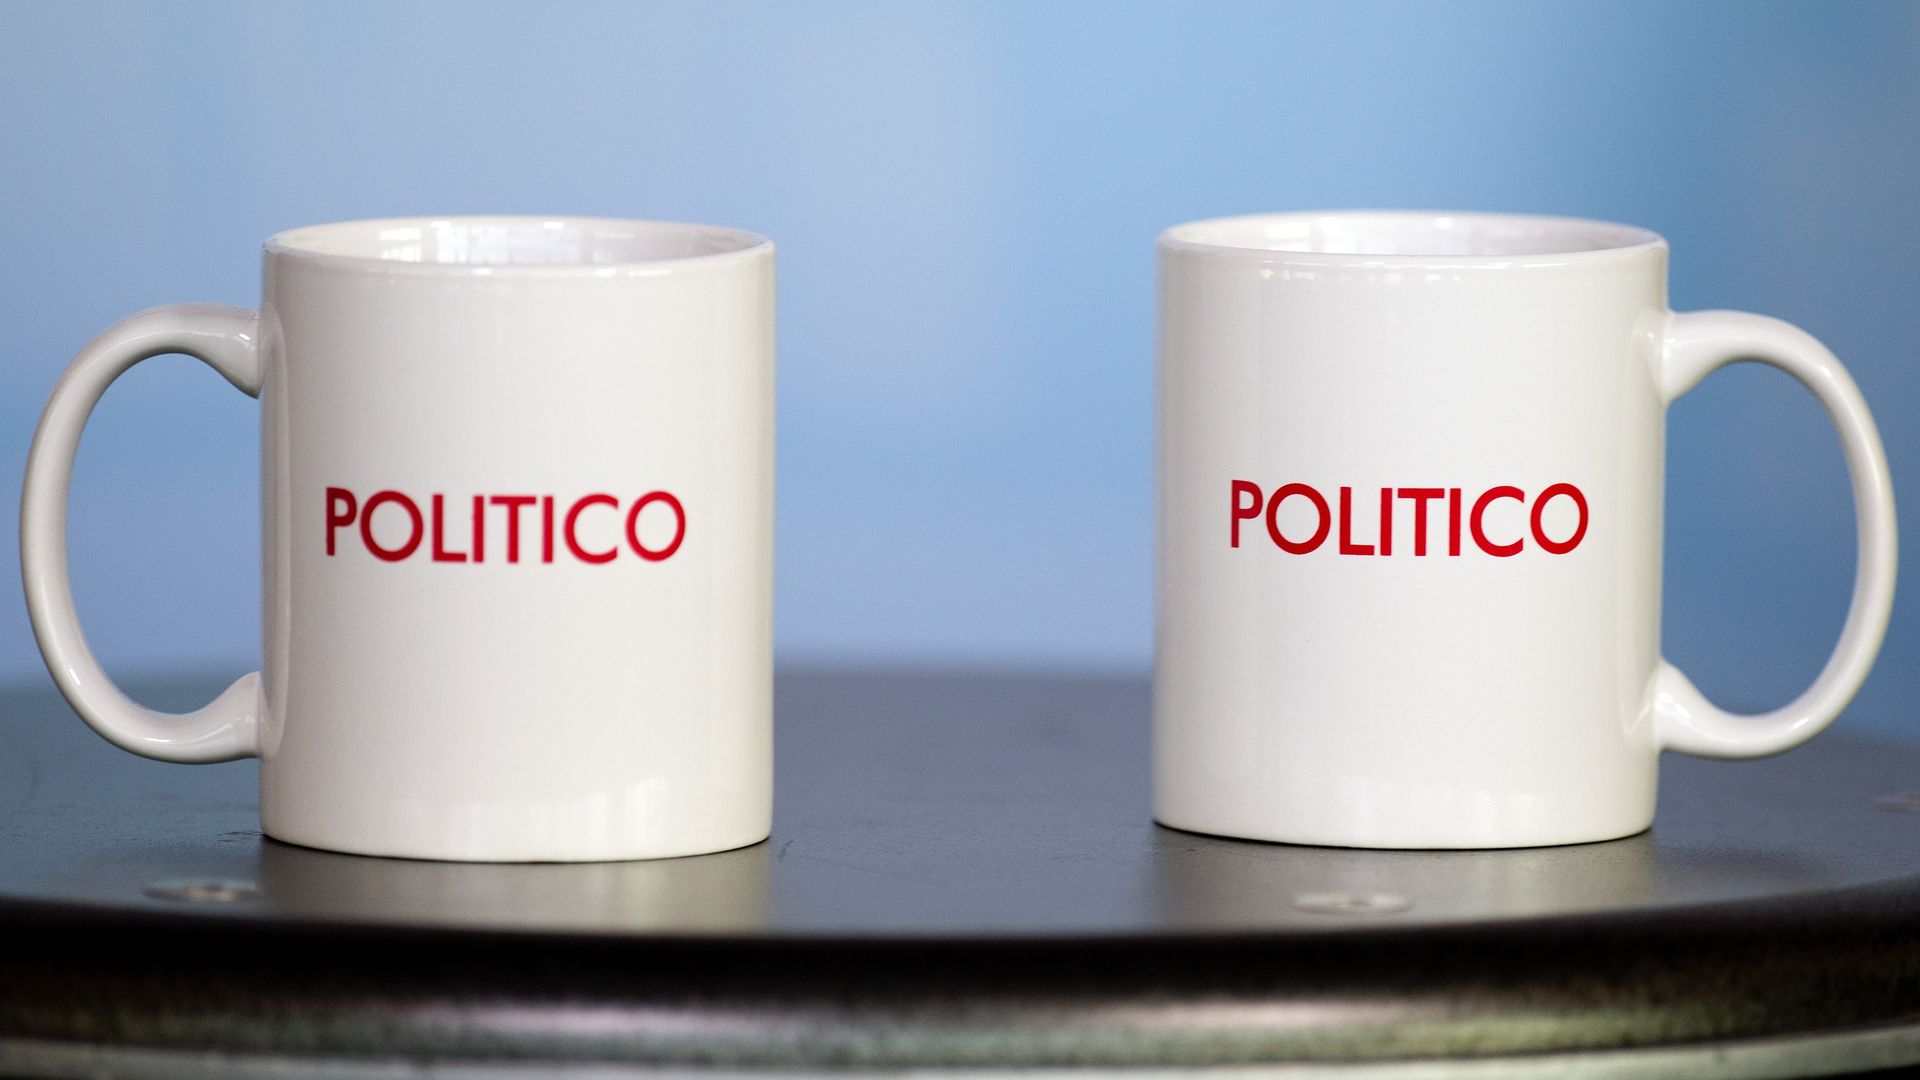 Politico mugs